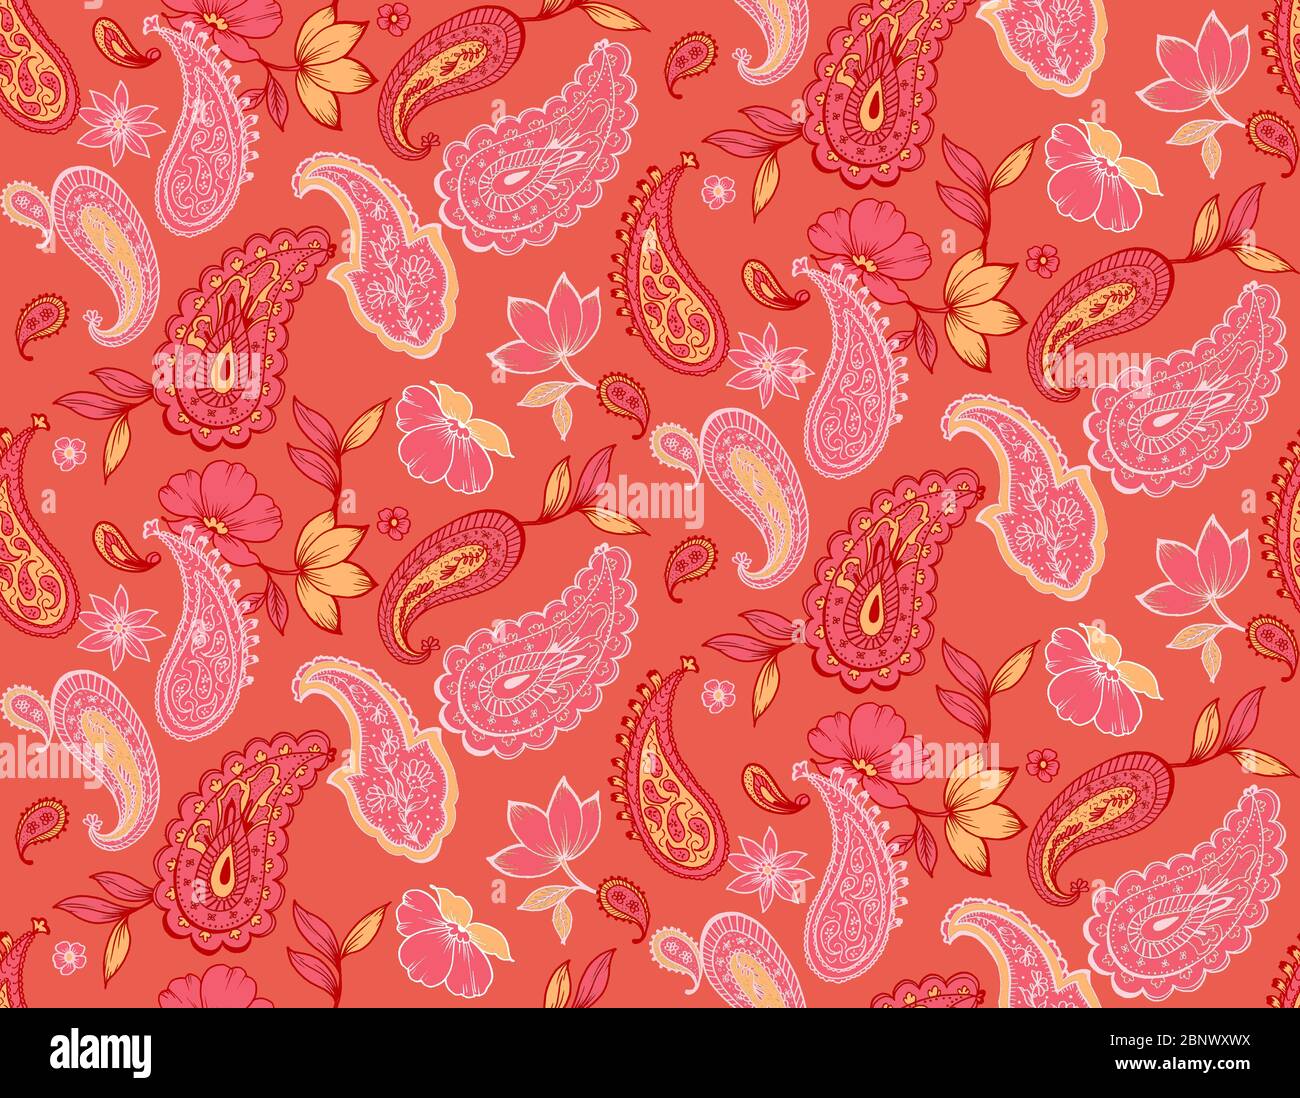 Seamless pattern based on ornament paisley Bandana Print. Boho vintage style background. Silk scarf pattern design style. Stock Photo